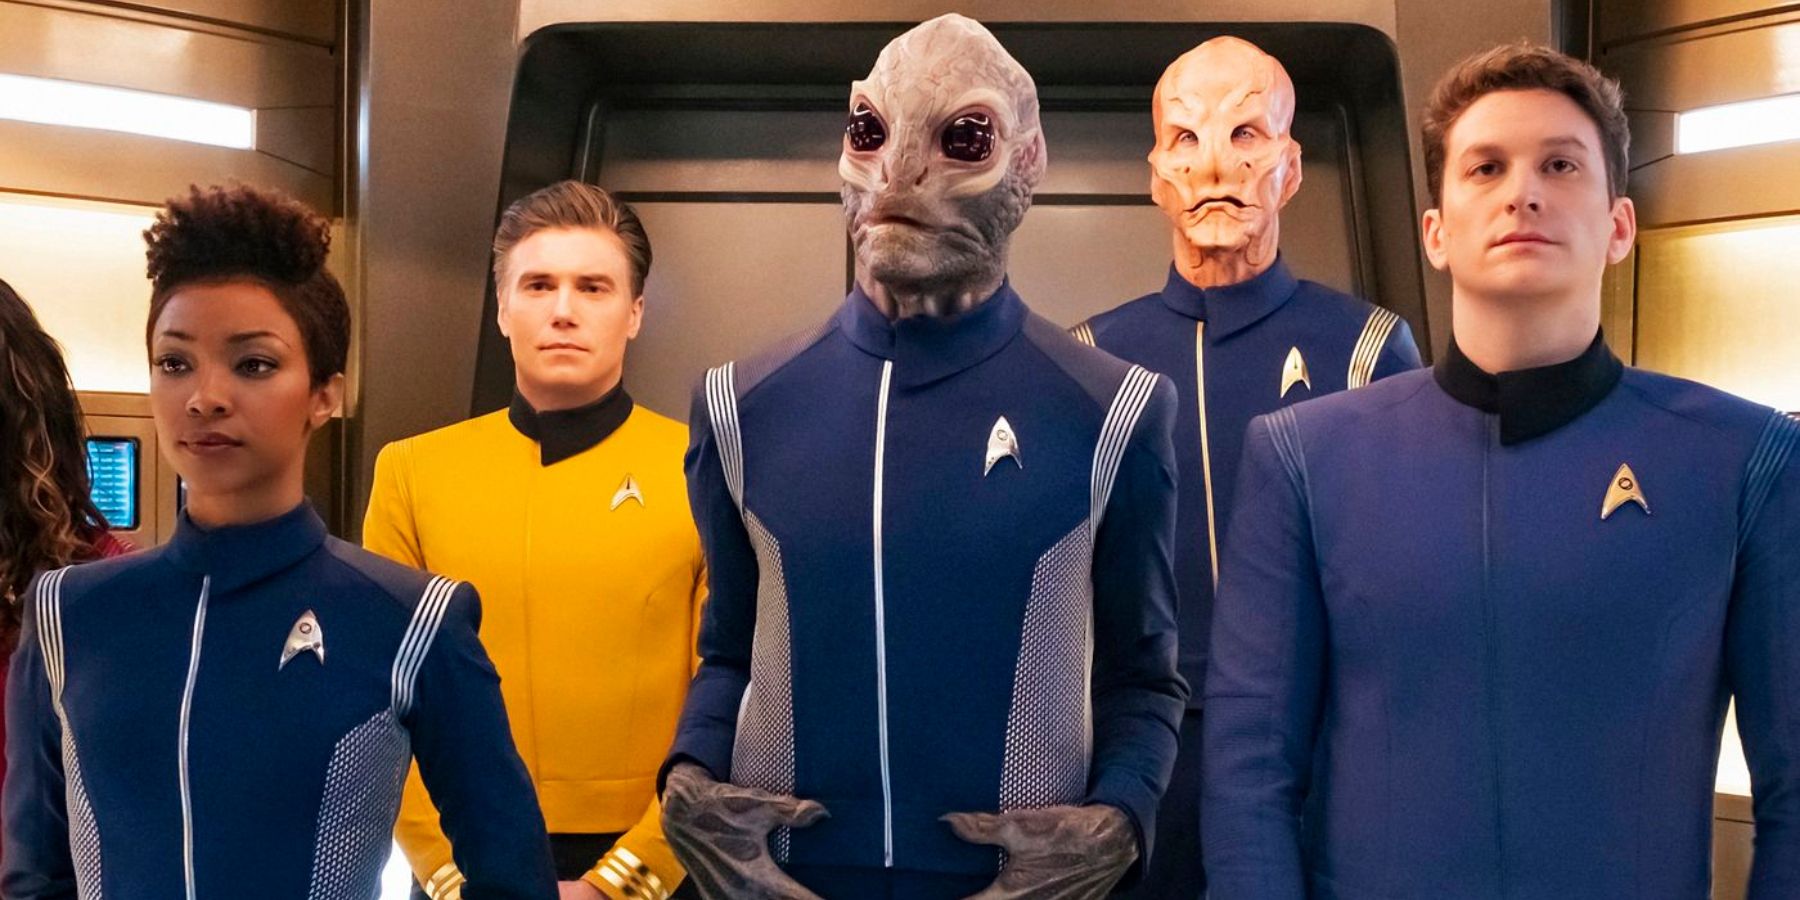 Star Trek_Non-Human Characters